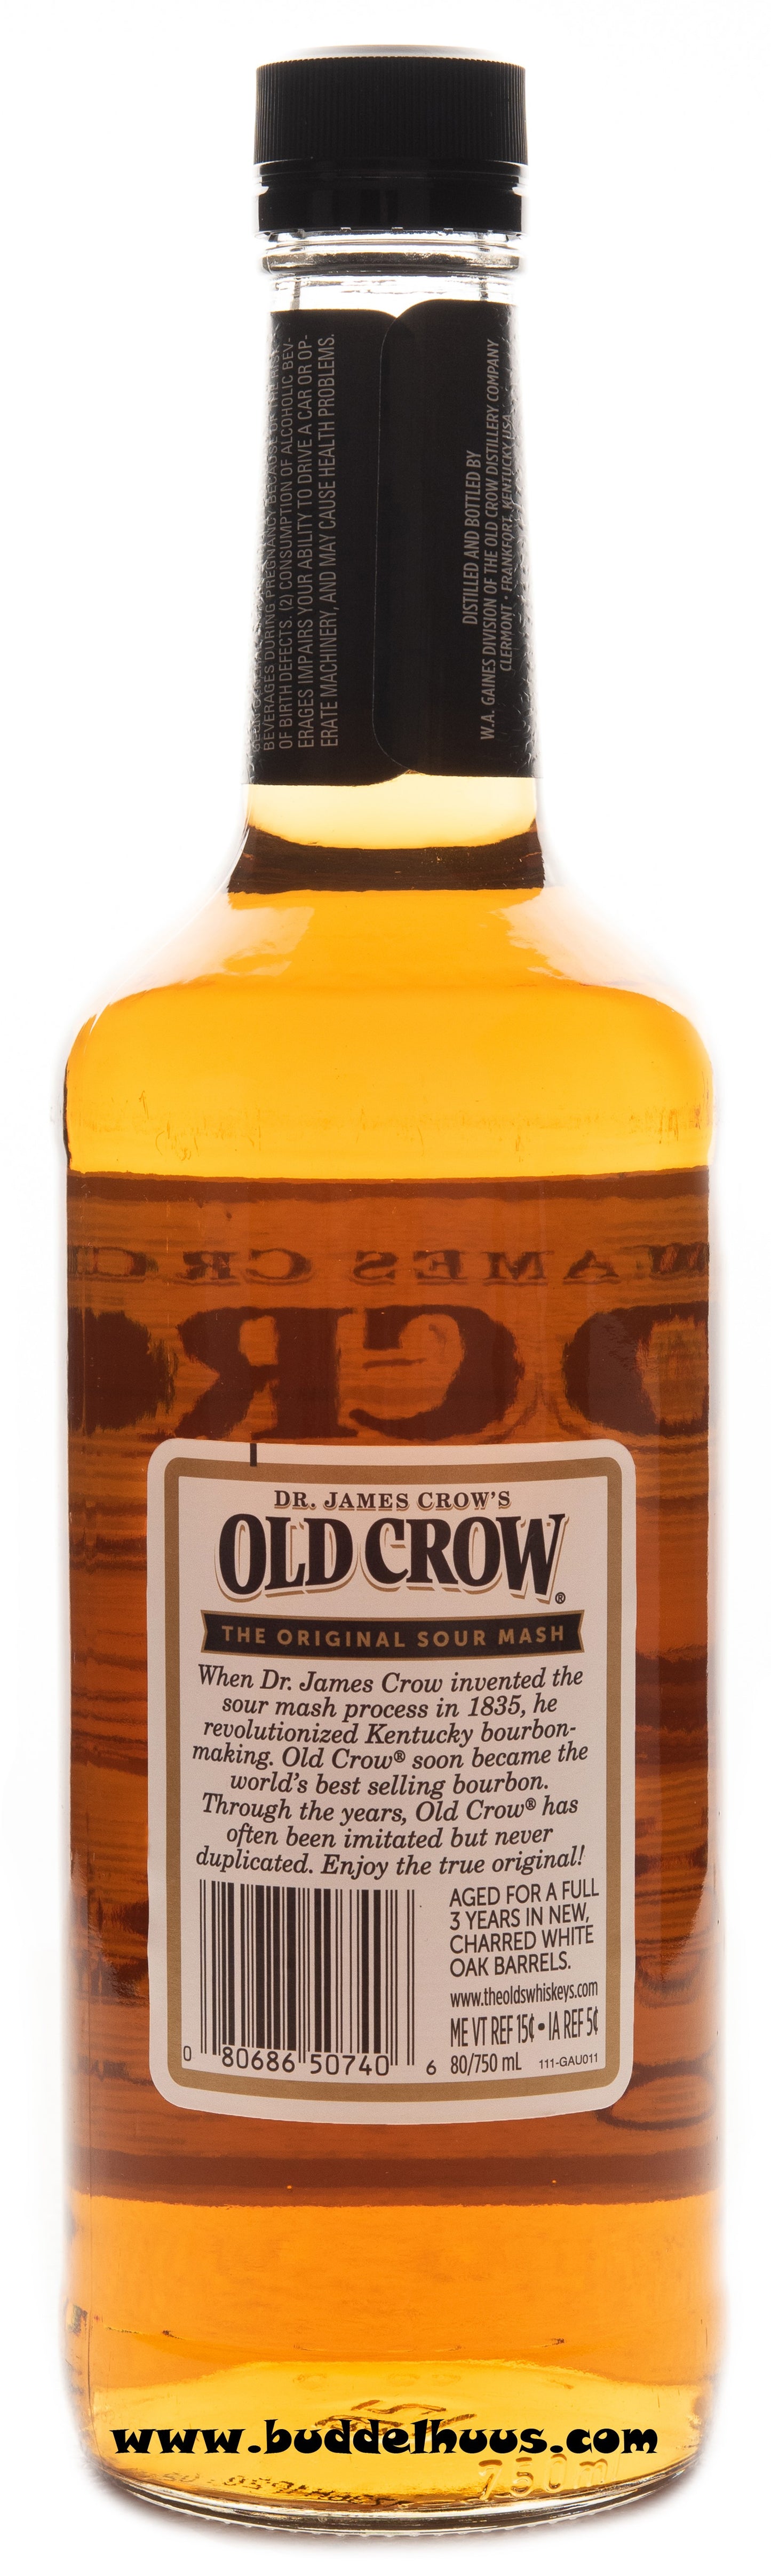 Old Crow Bourbon